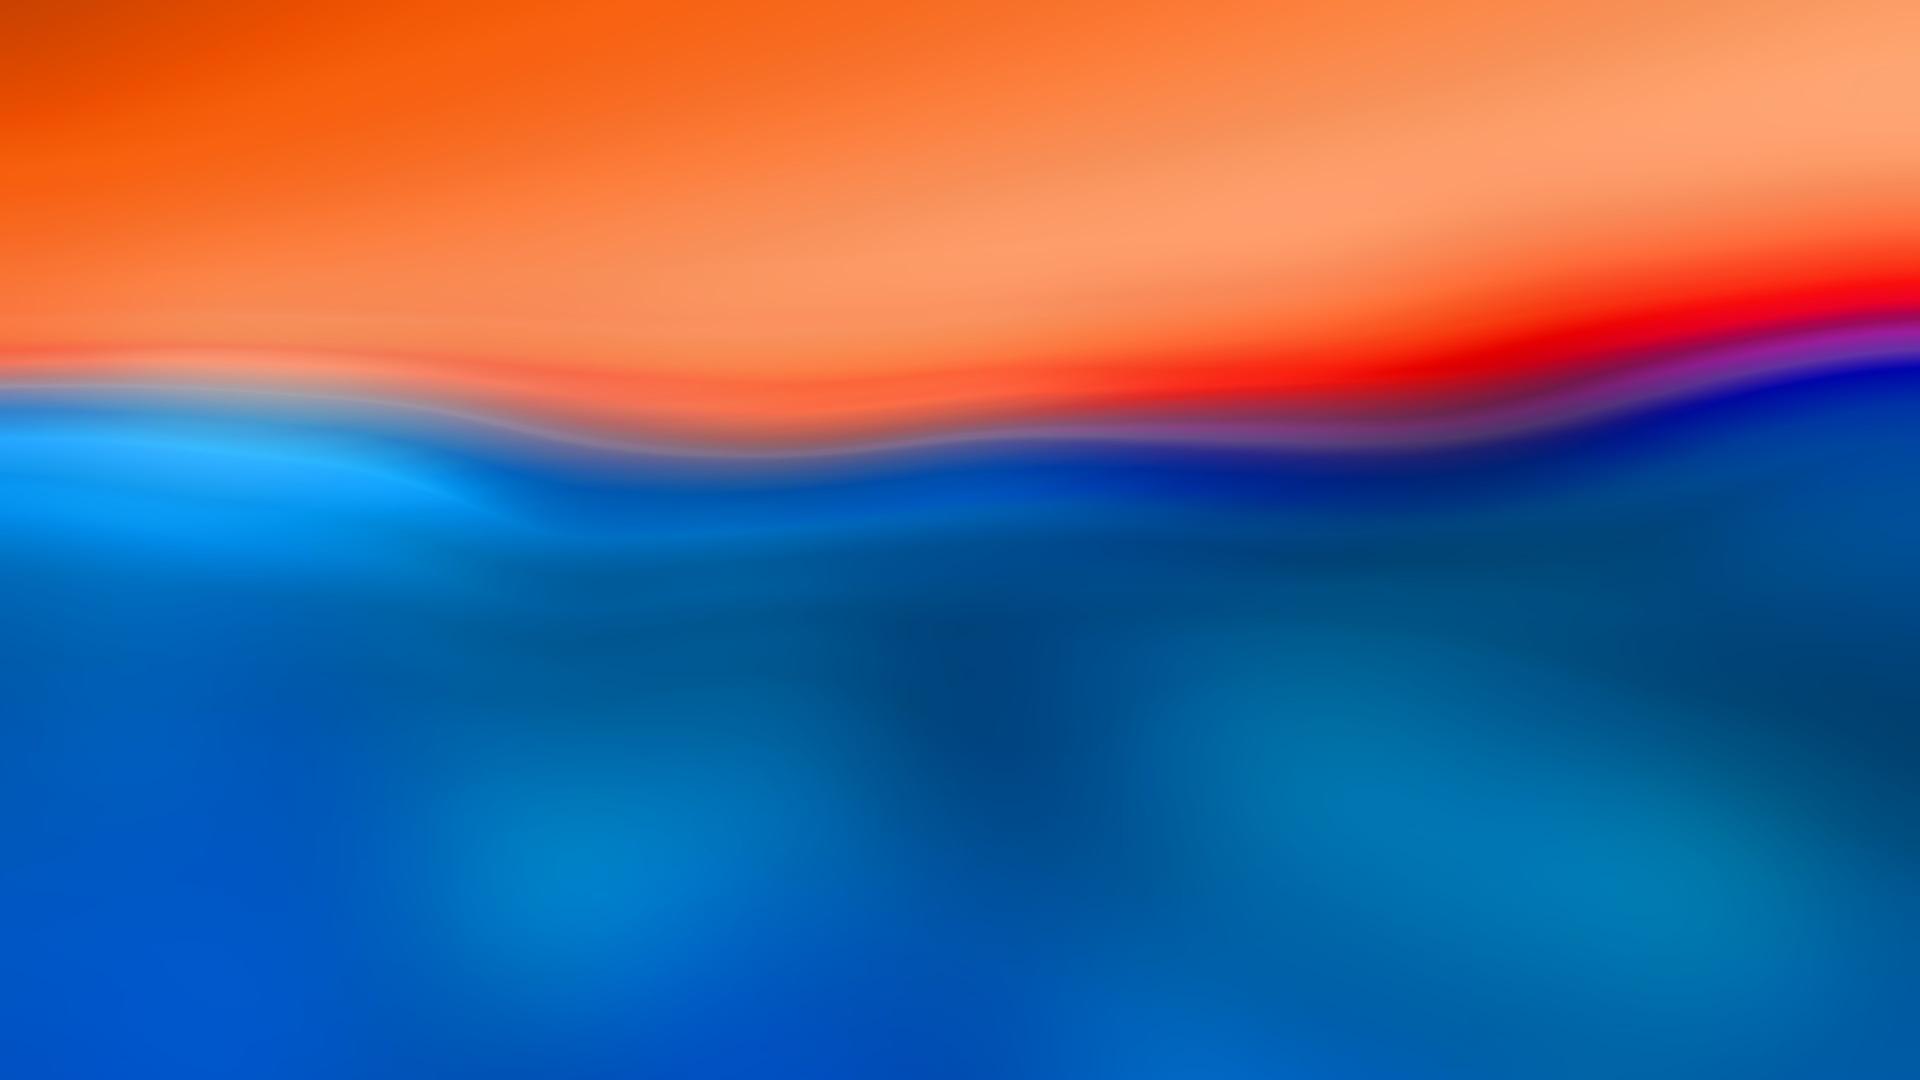 blur wallpaper,blue,sky,orange,red,daytime